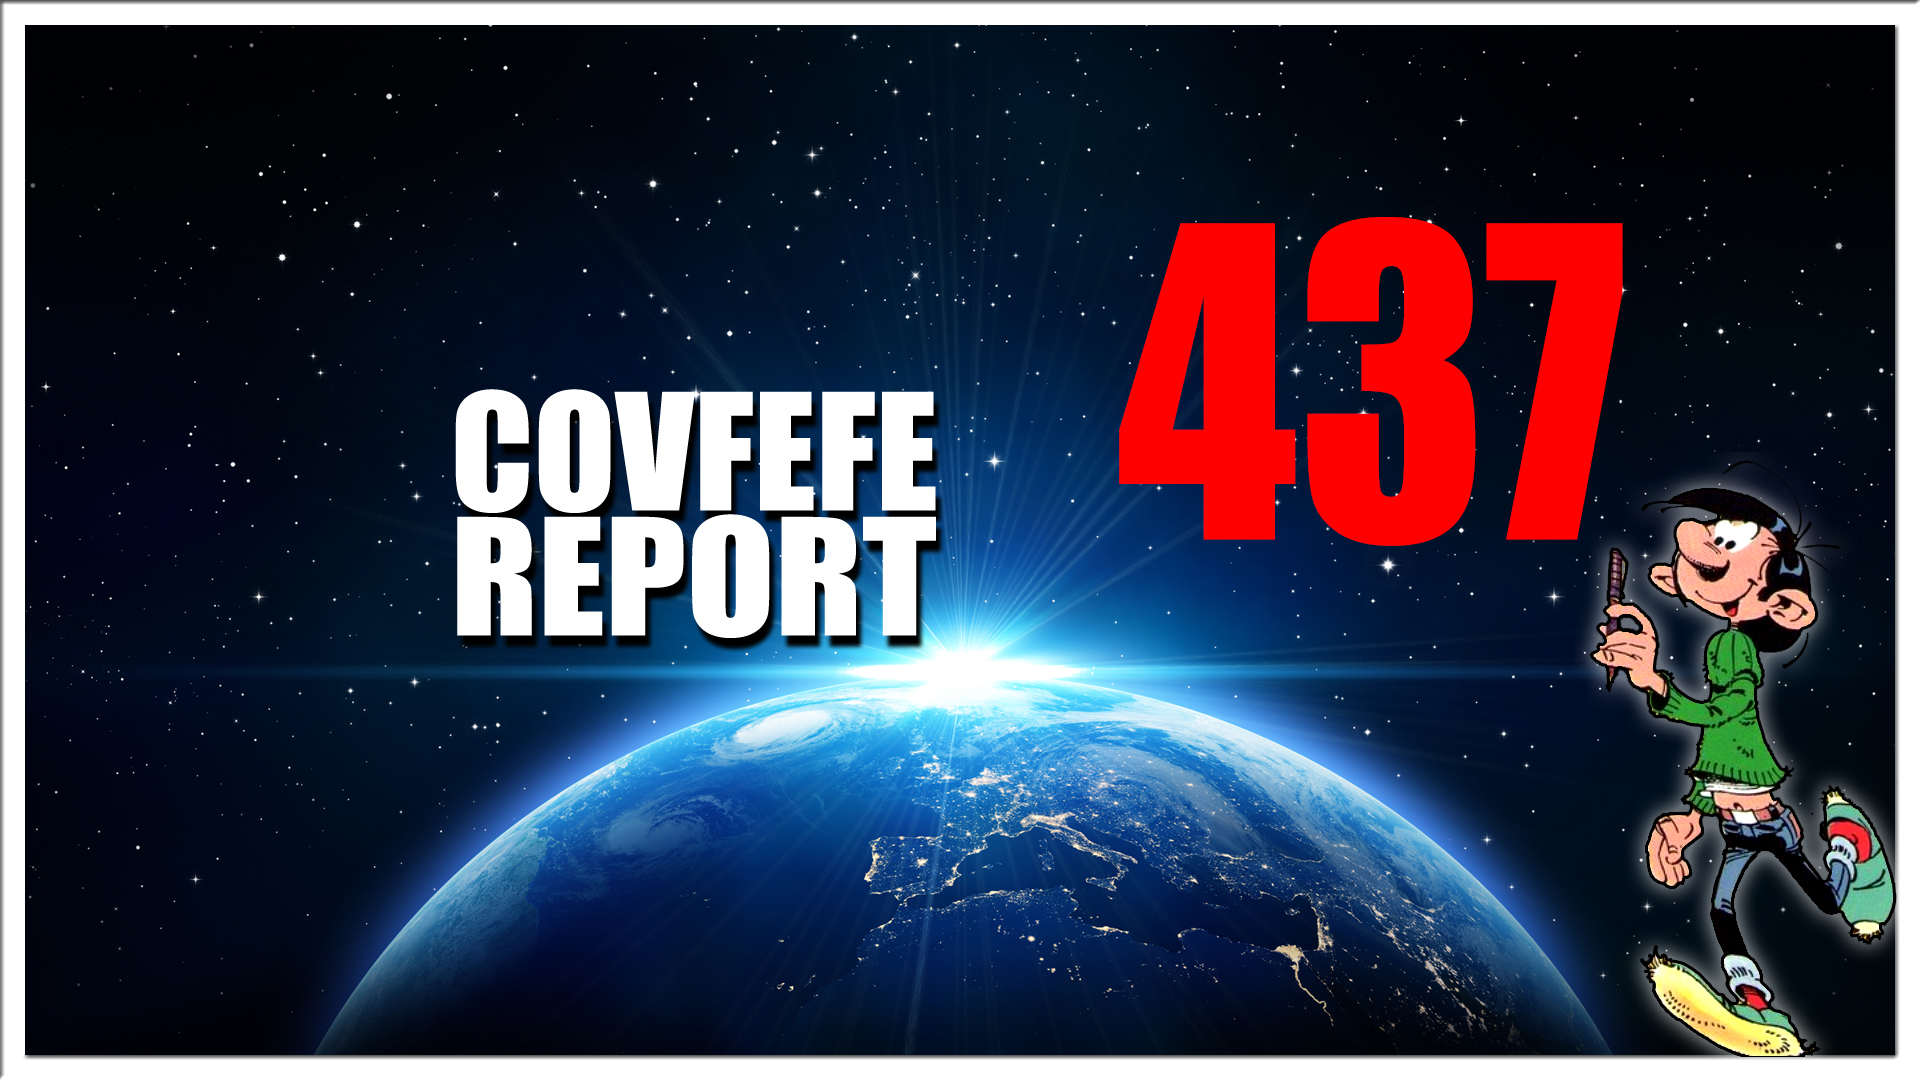 Covfefe Report 437. Misspellings matters, April Showers